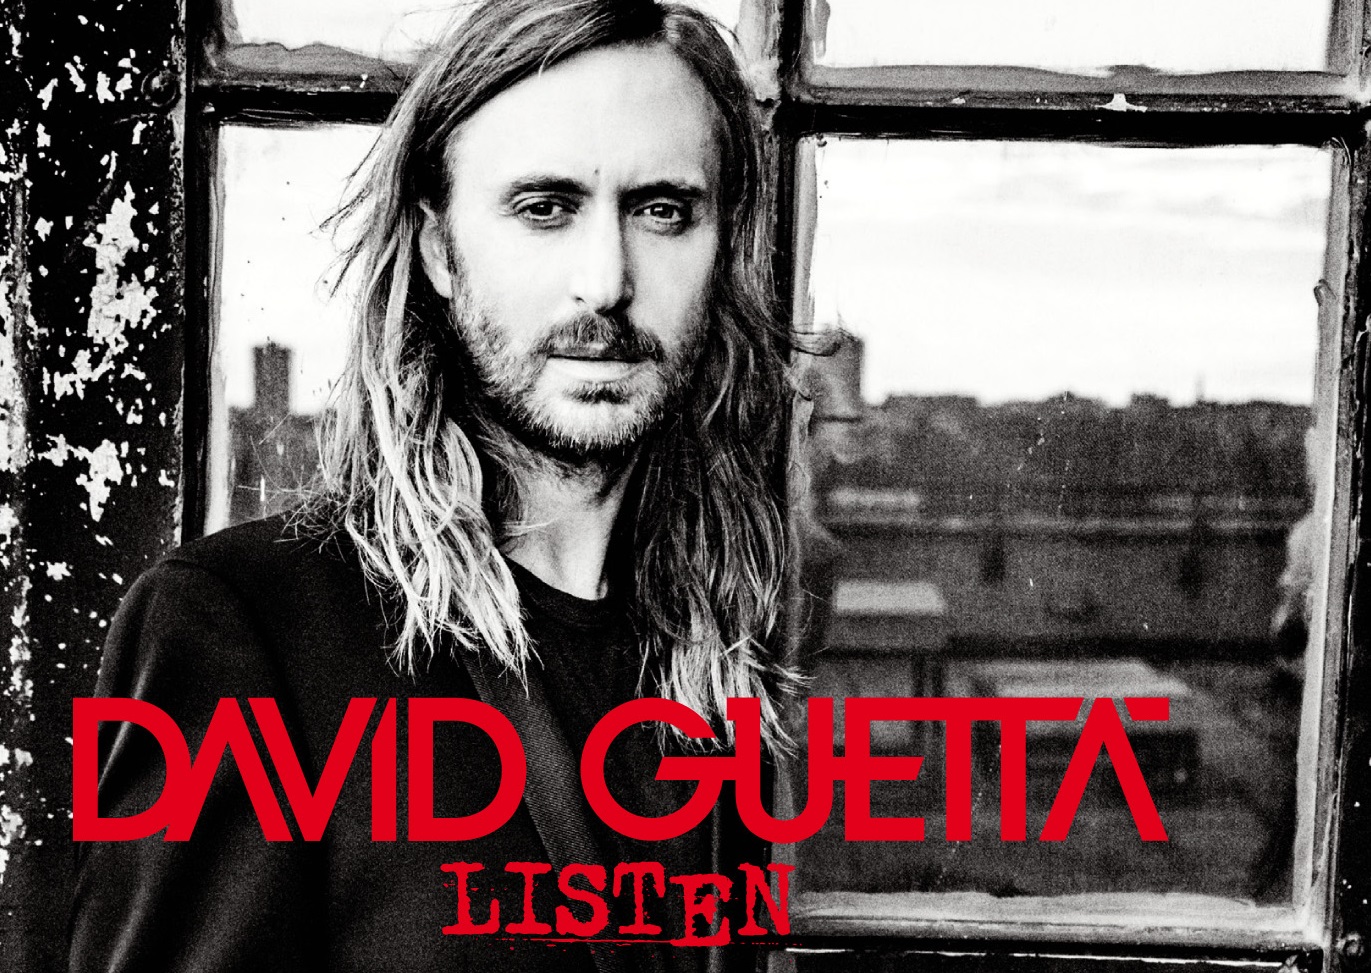 Listen David Guetta Lastfm